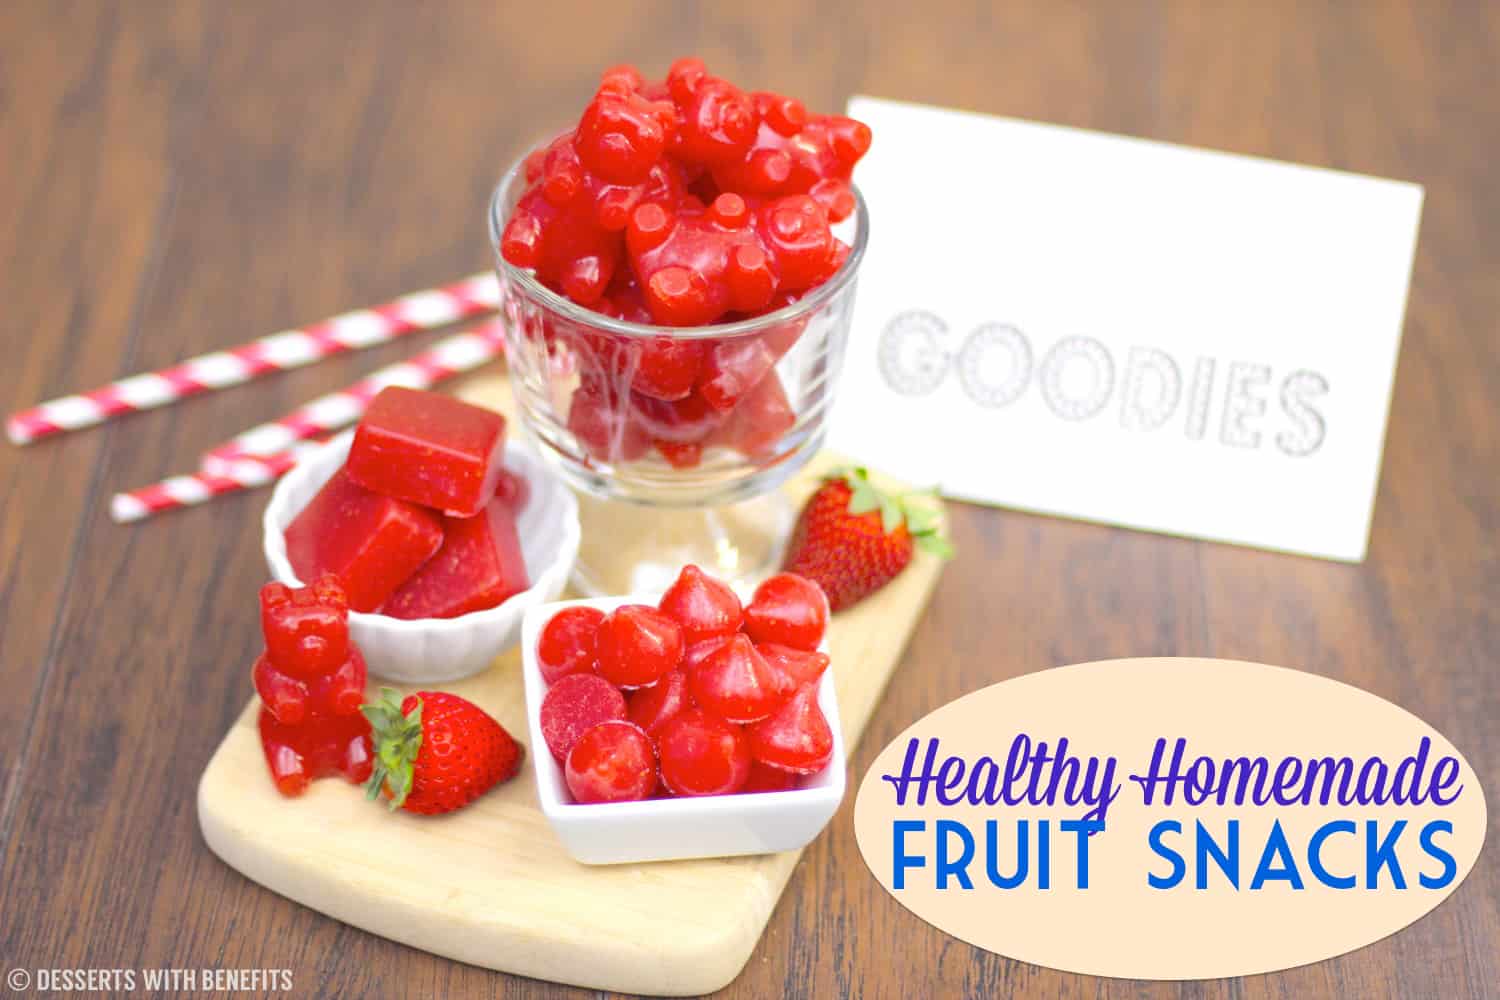 Healthy homemade fruit snacks